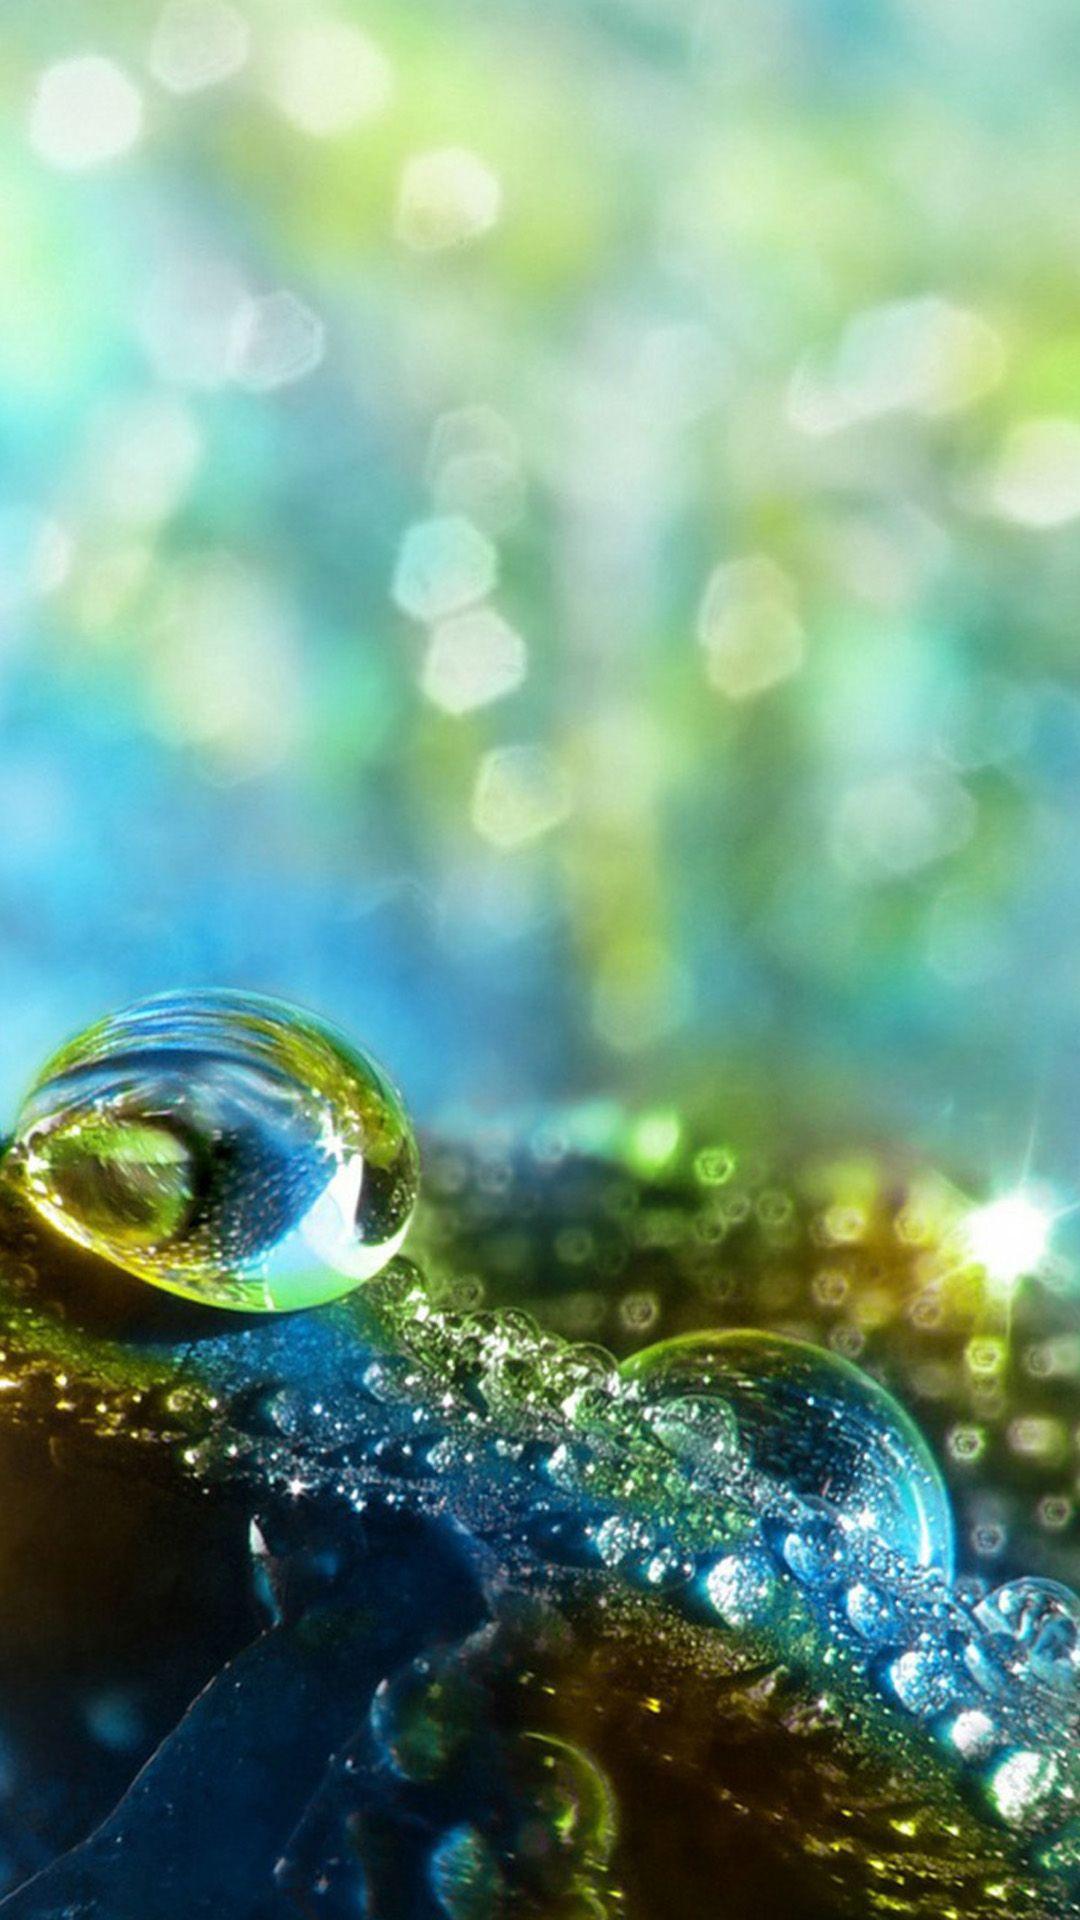 Beautiful water droplets 2 Samsung Galaxy Note 3 Wallpaper, Samsung